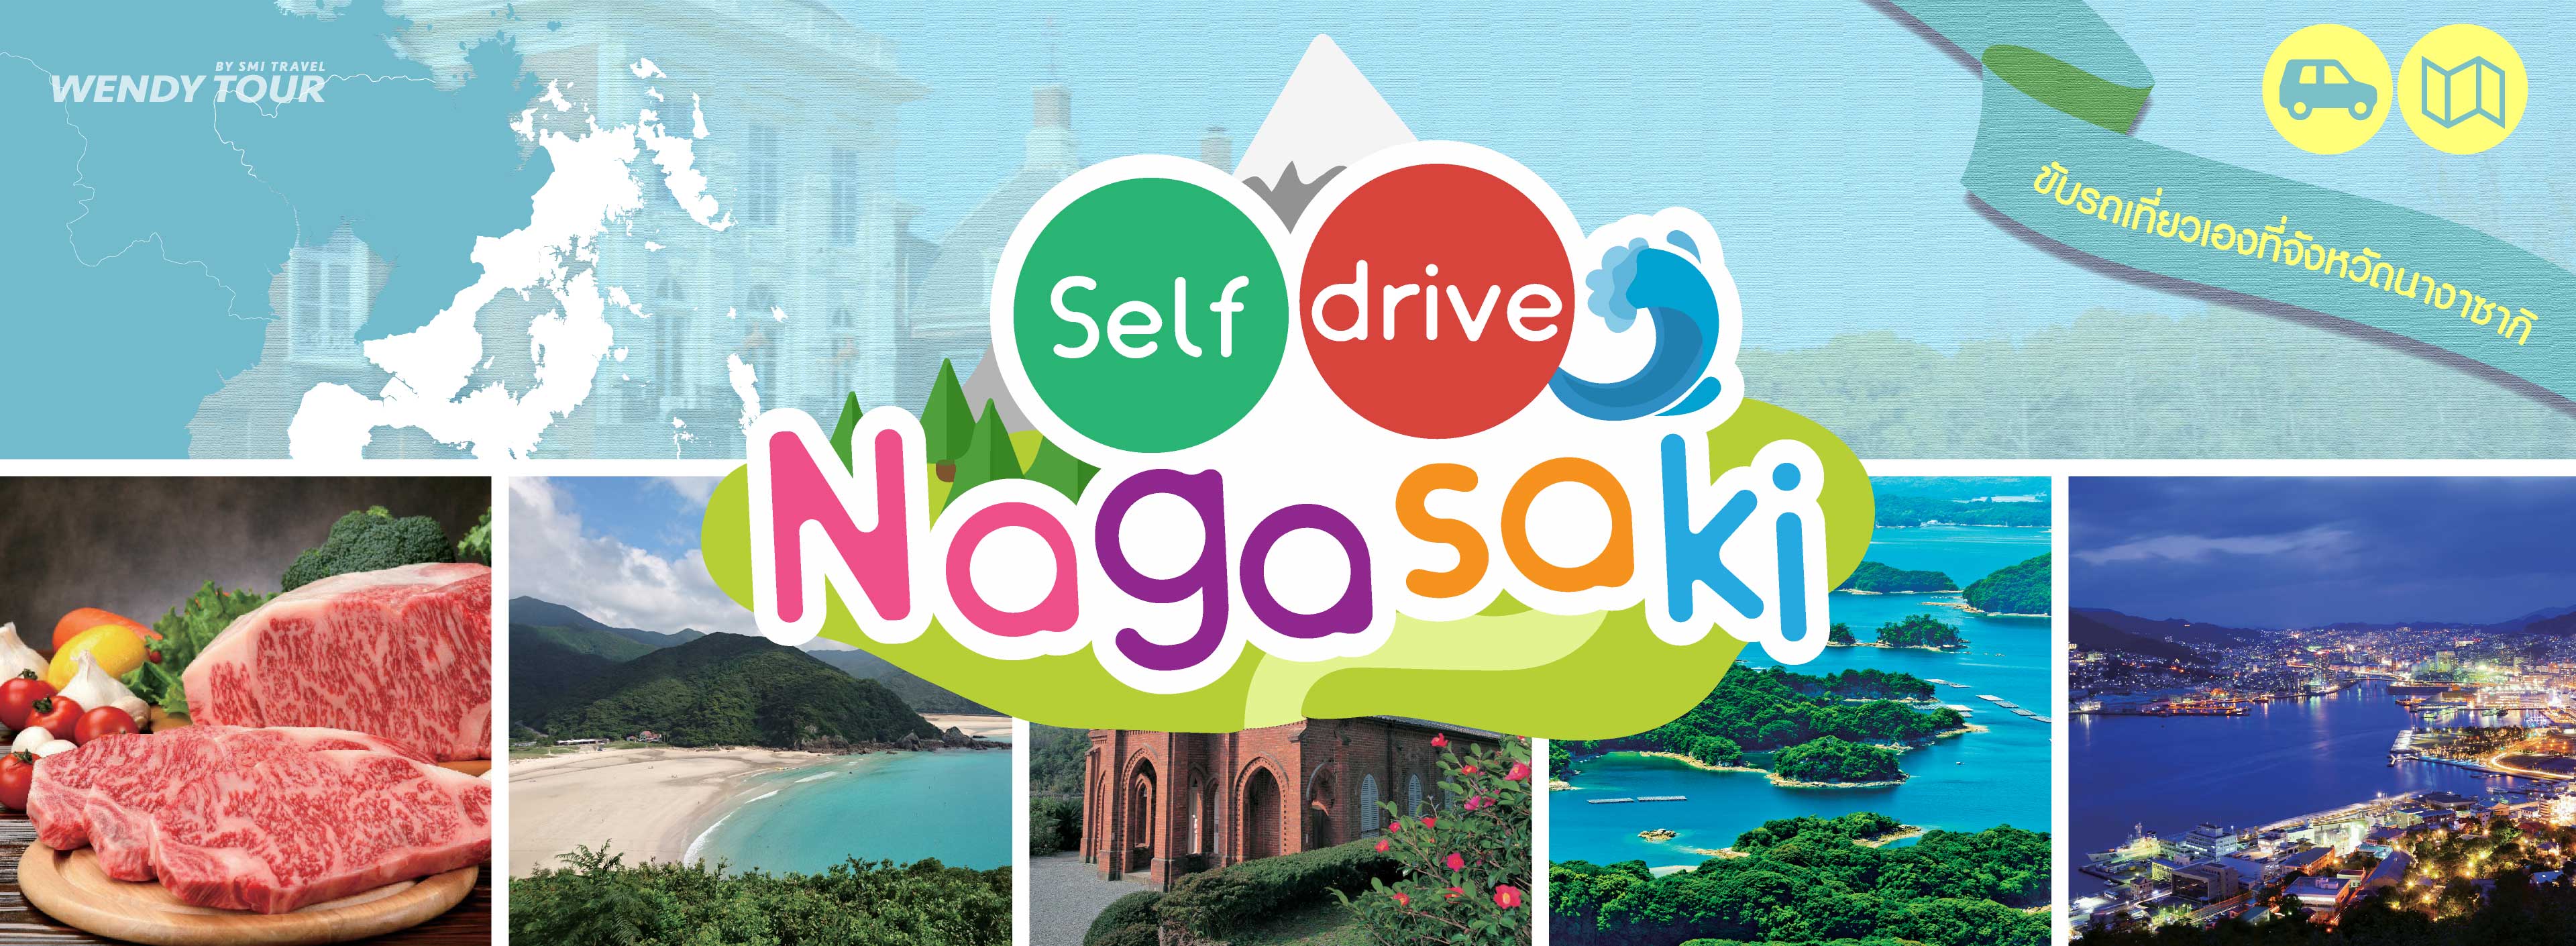 Nagasaki Self Drive ขับรถเที่ยงเอง ,นางาซากิ